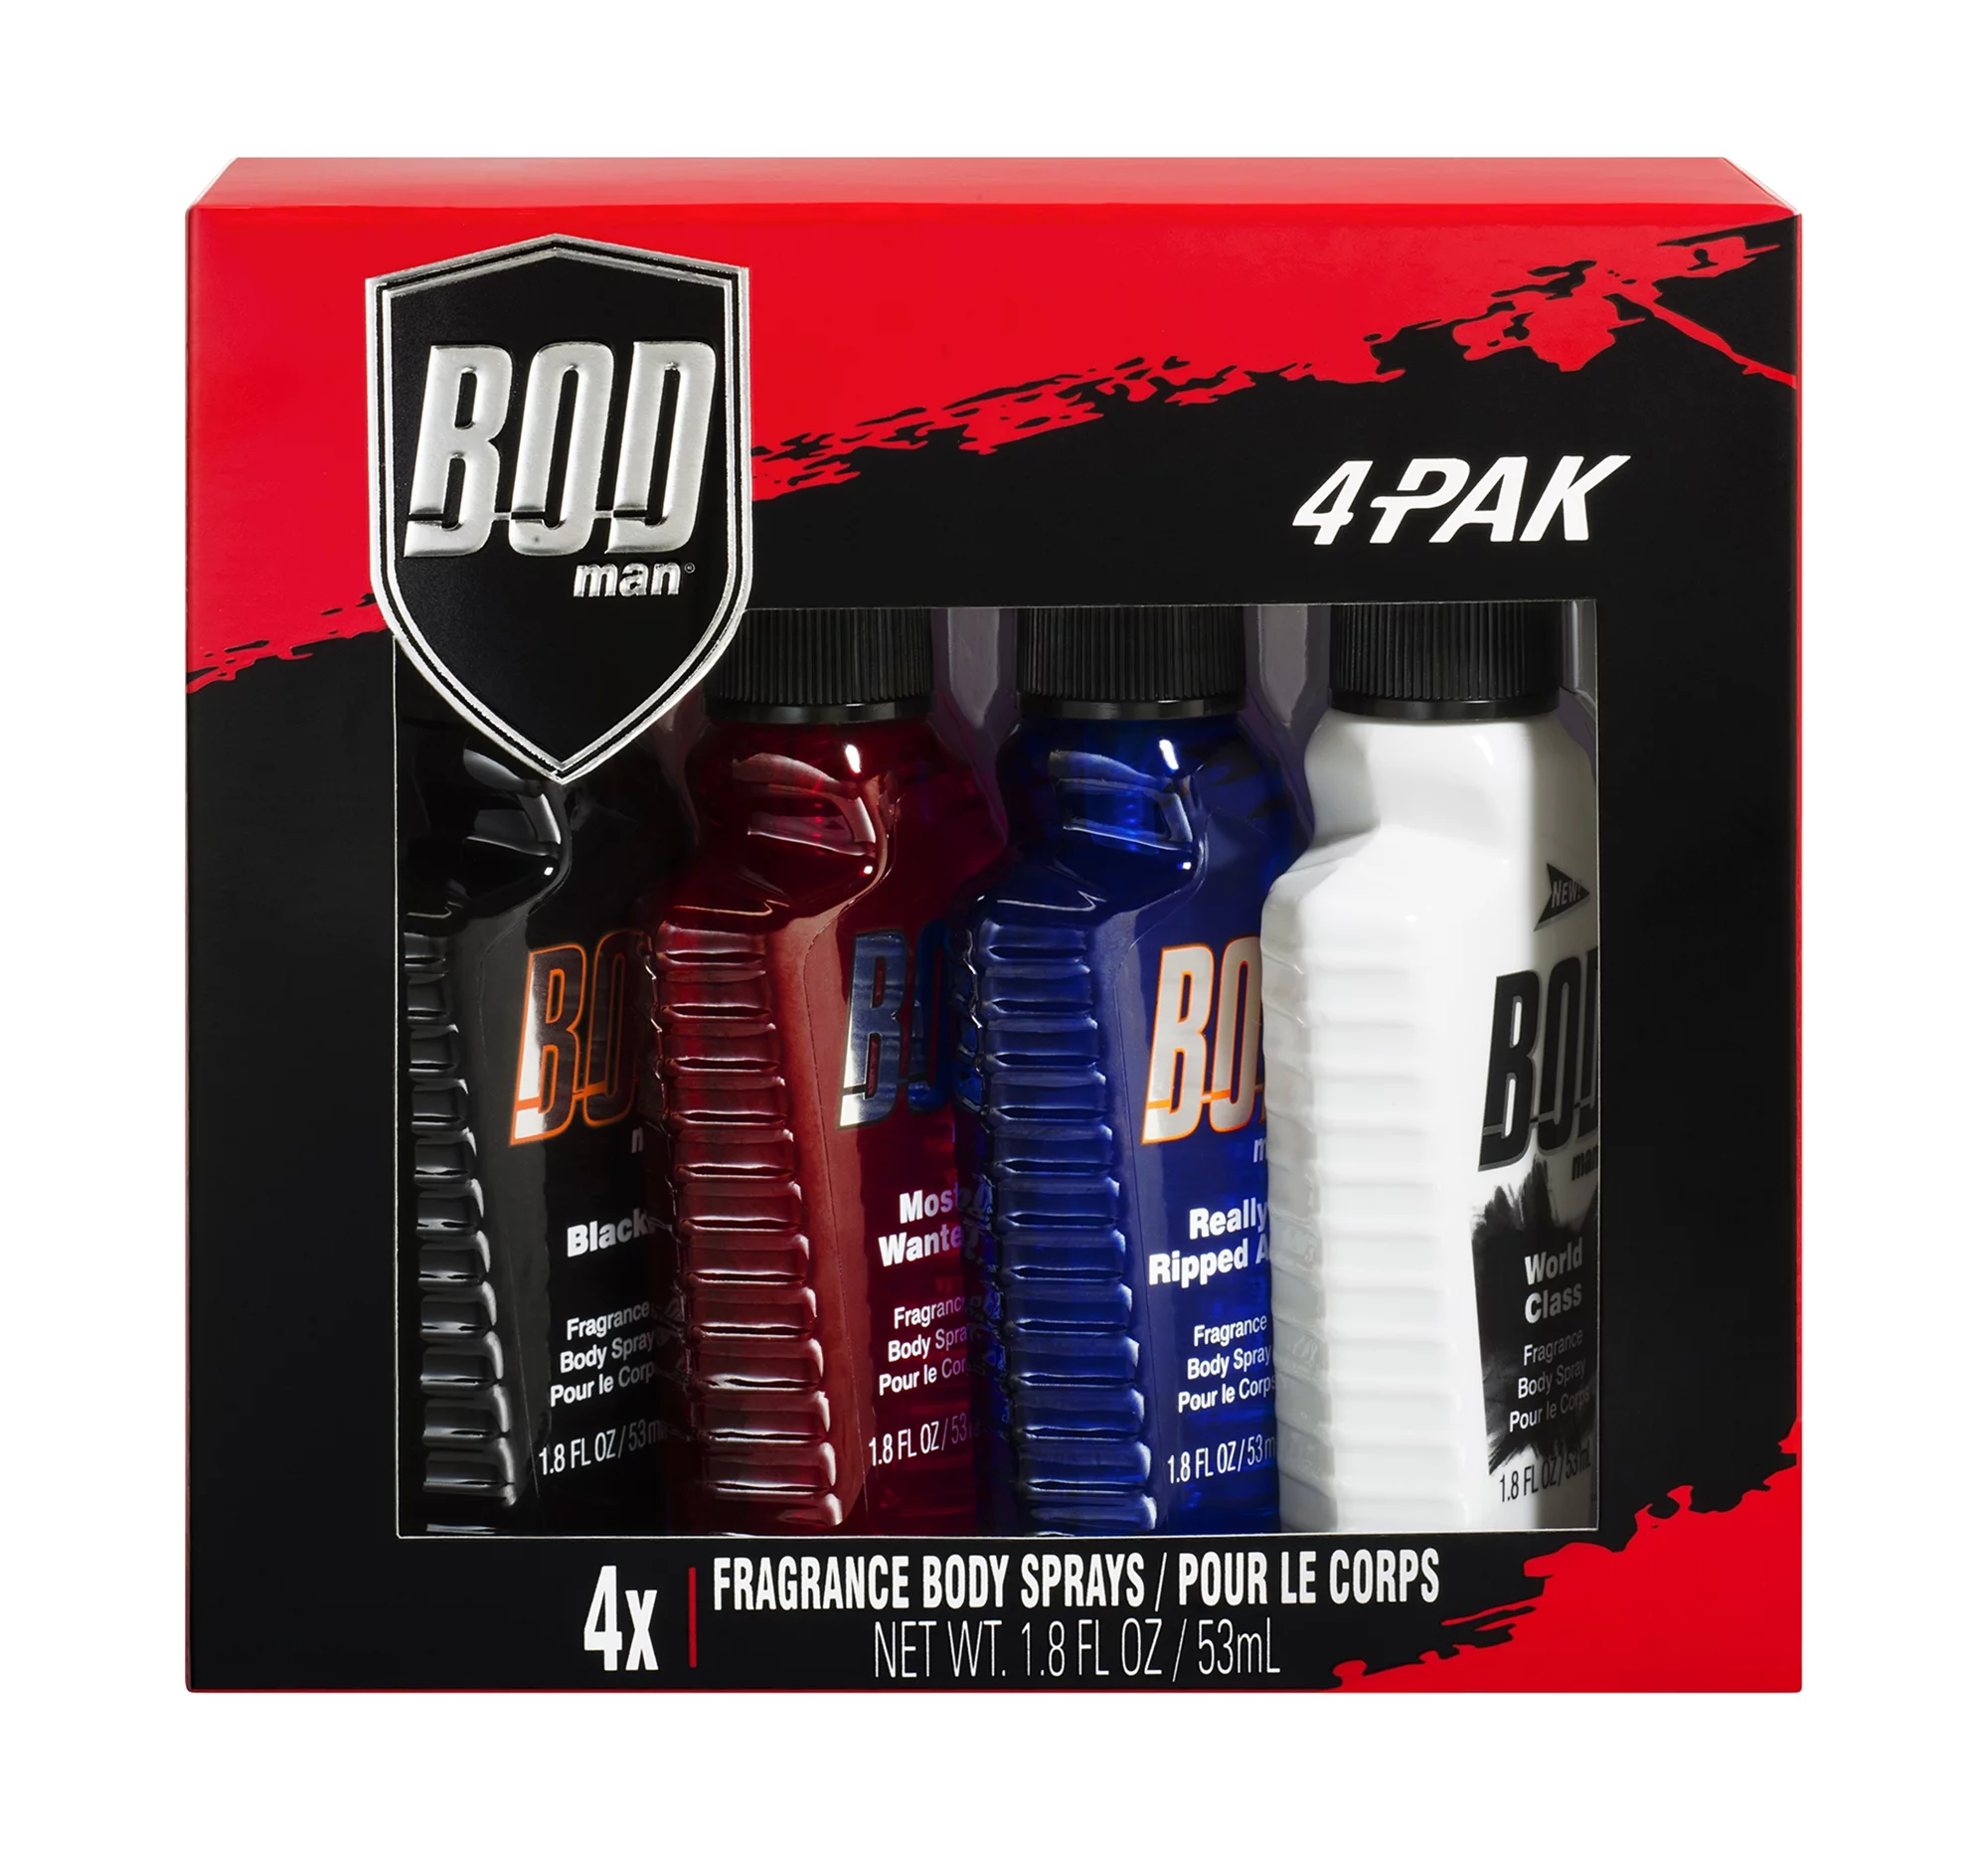 BOD Man Fragrance Body Spray, Mini Gift Set, 1.8 oz, 4 Pack